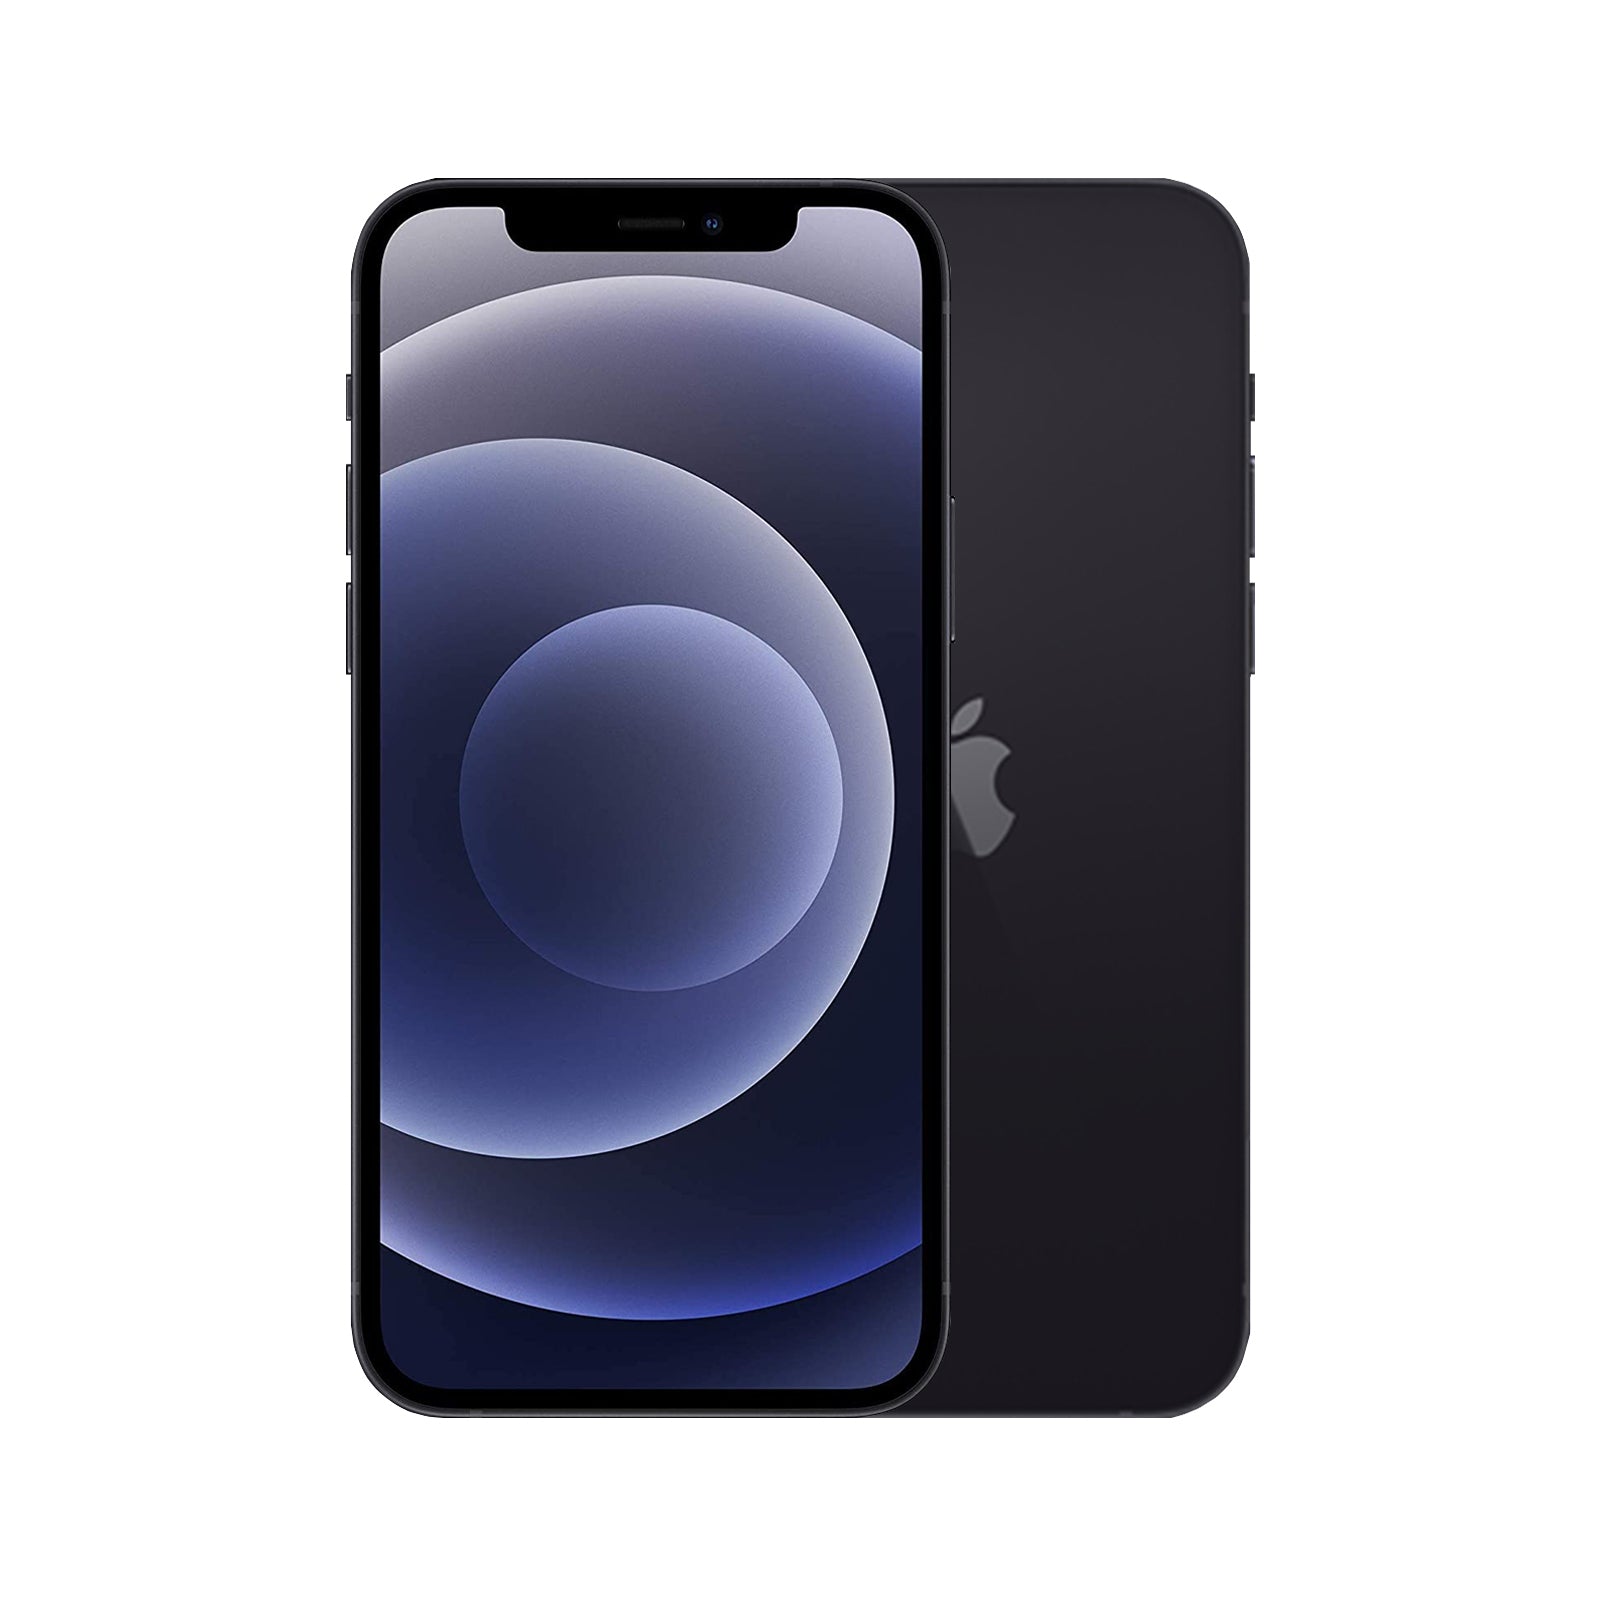 Apple iPhone 12 Mini 128GB Black - Good - Refurbished